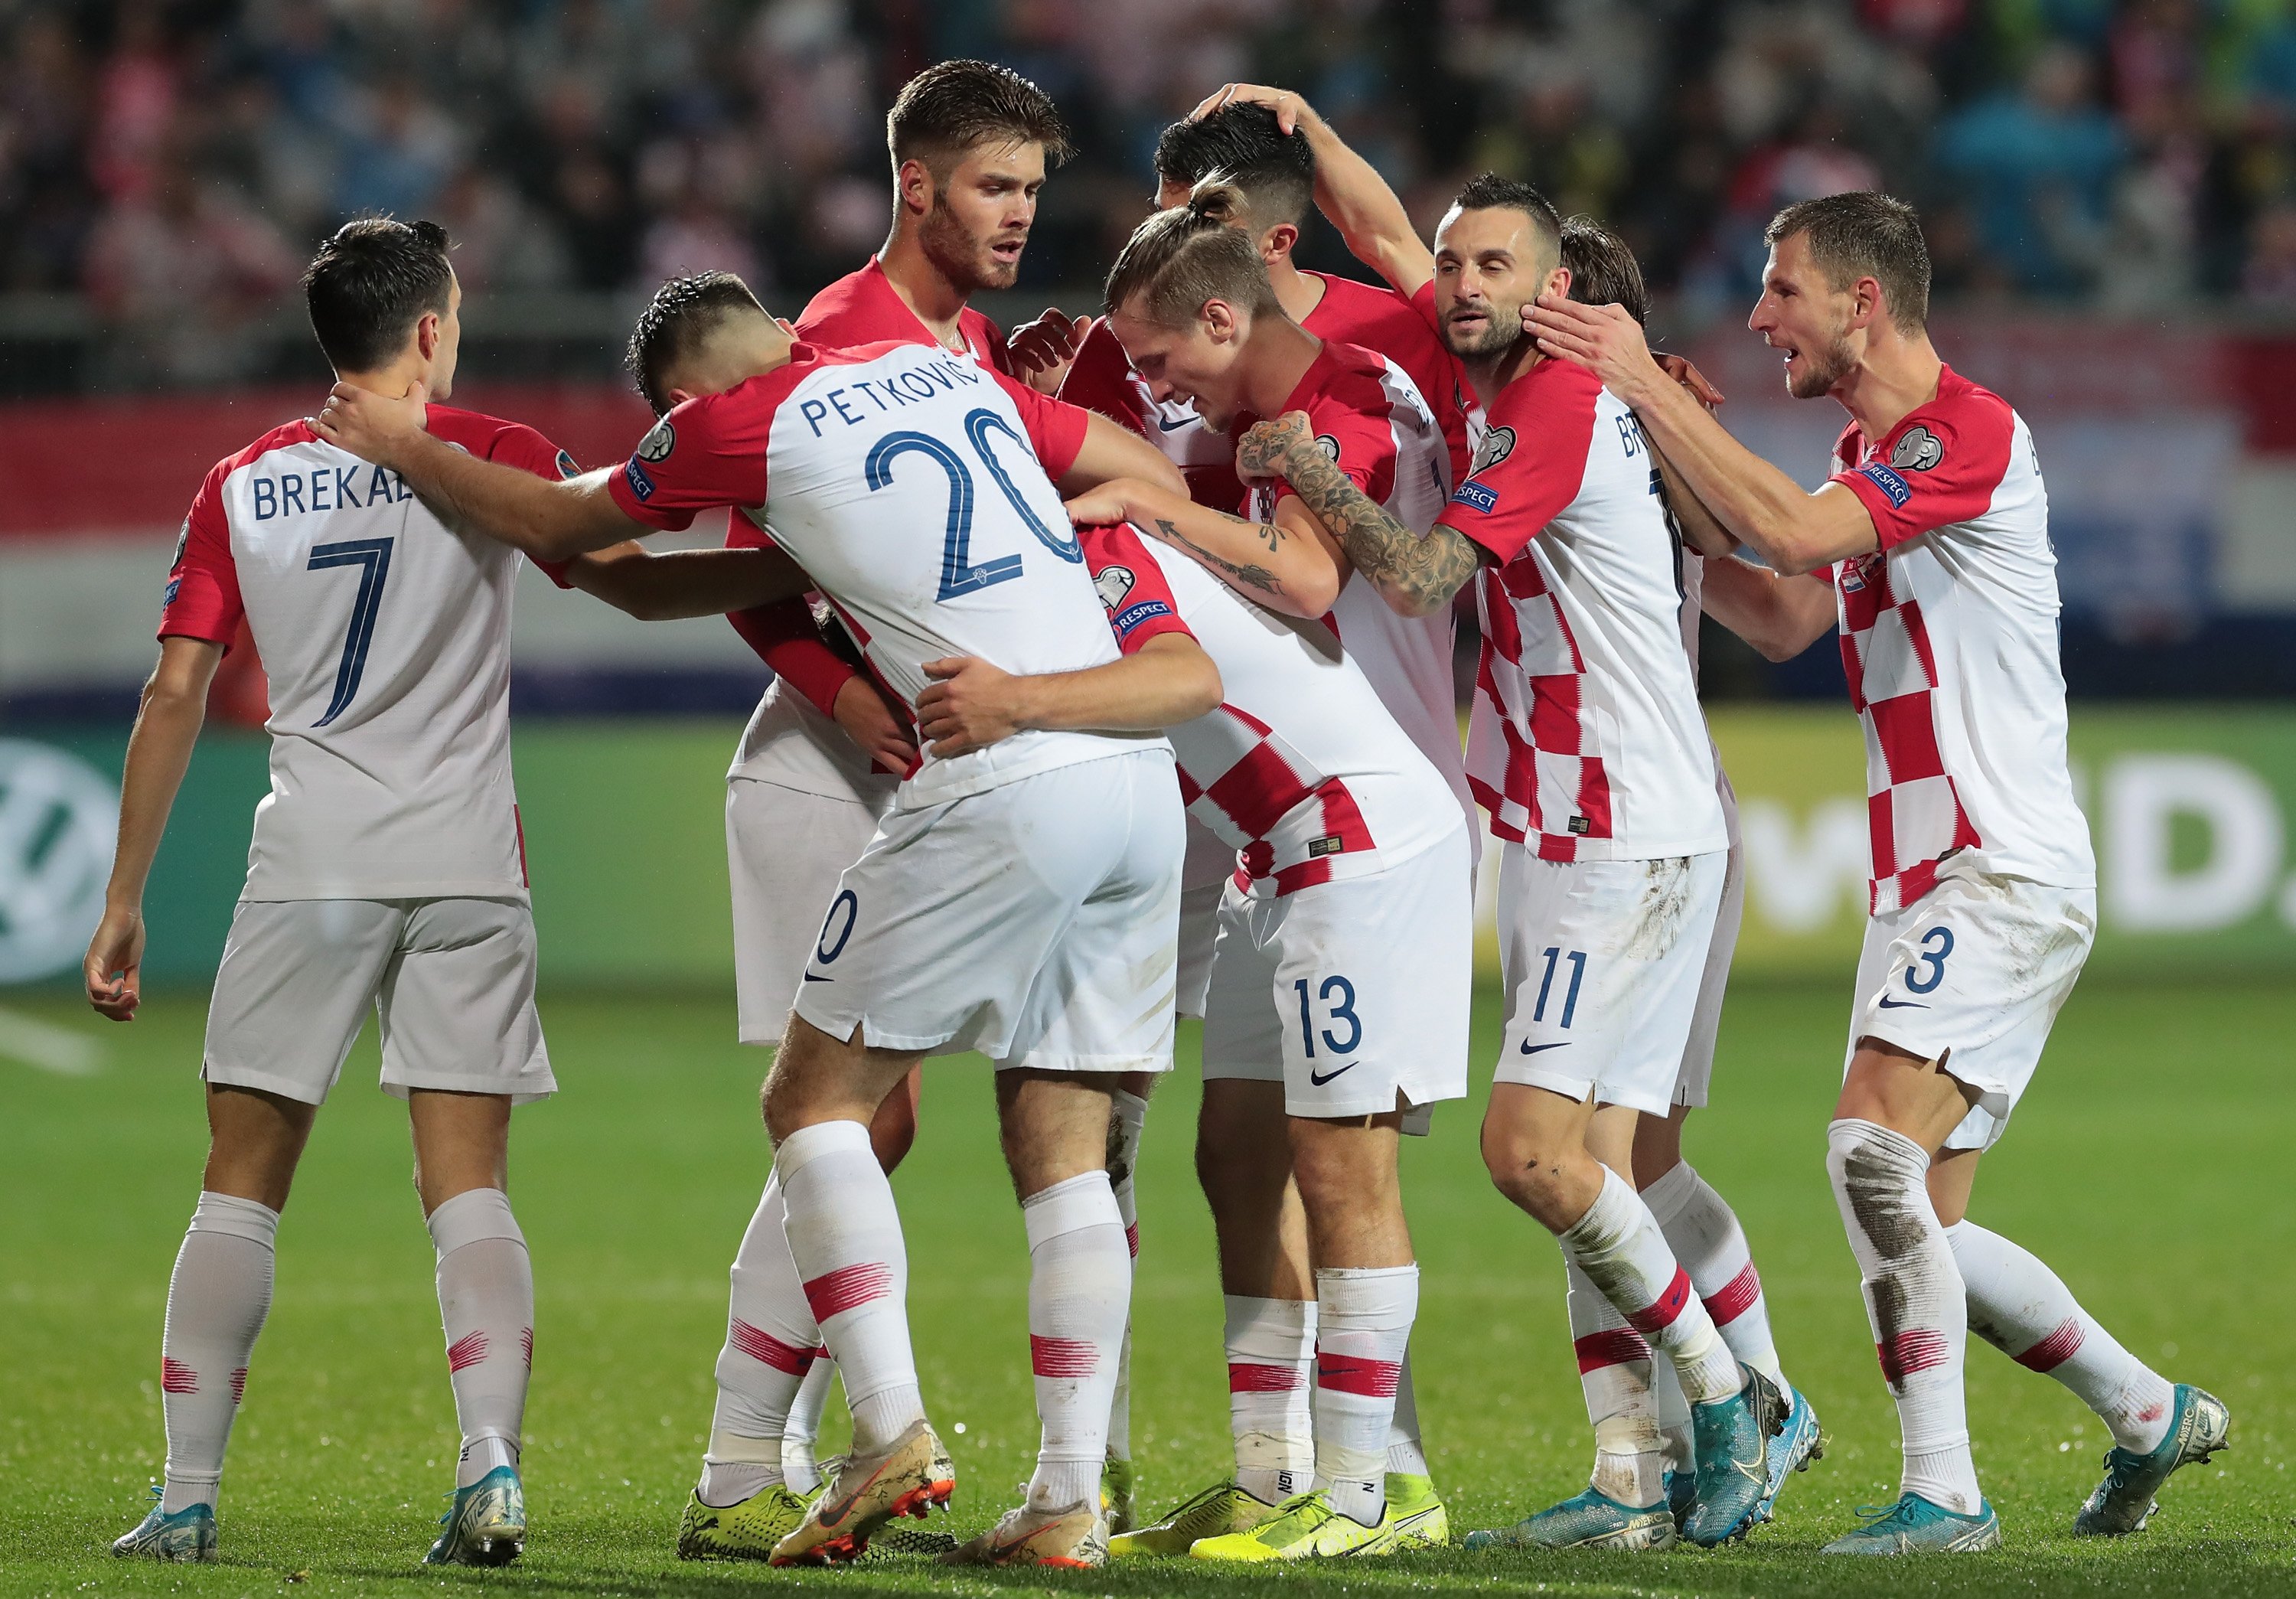 Krosia kunci satu tiket ke putaran final Piala Eropa setelah menang 3-1 atas Slovakia. (Foto: Twitter/@HNS_CFF)